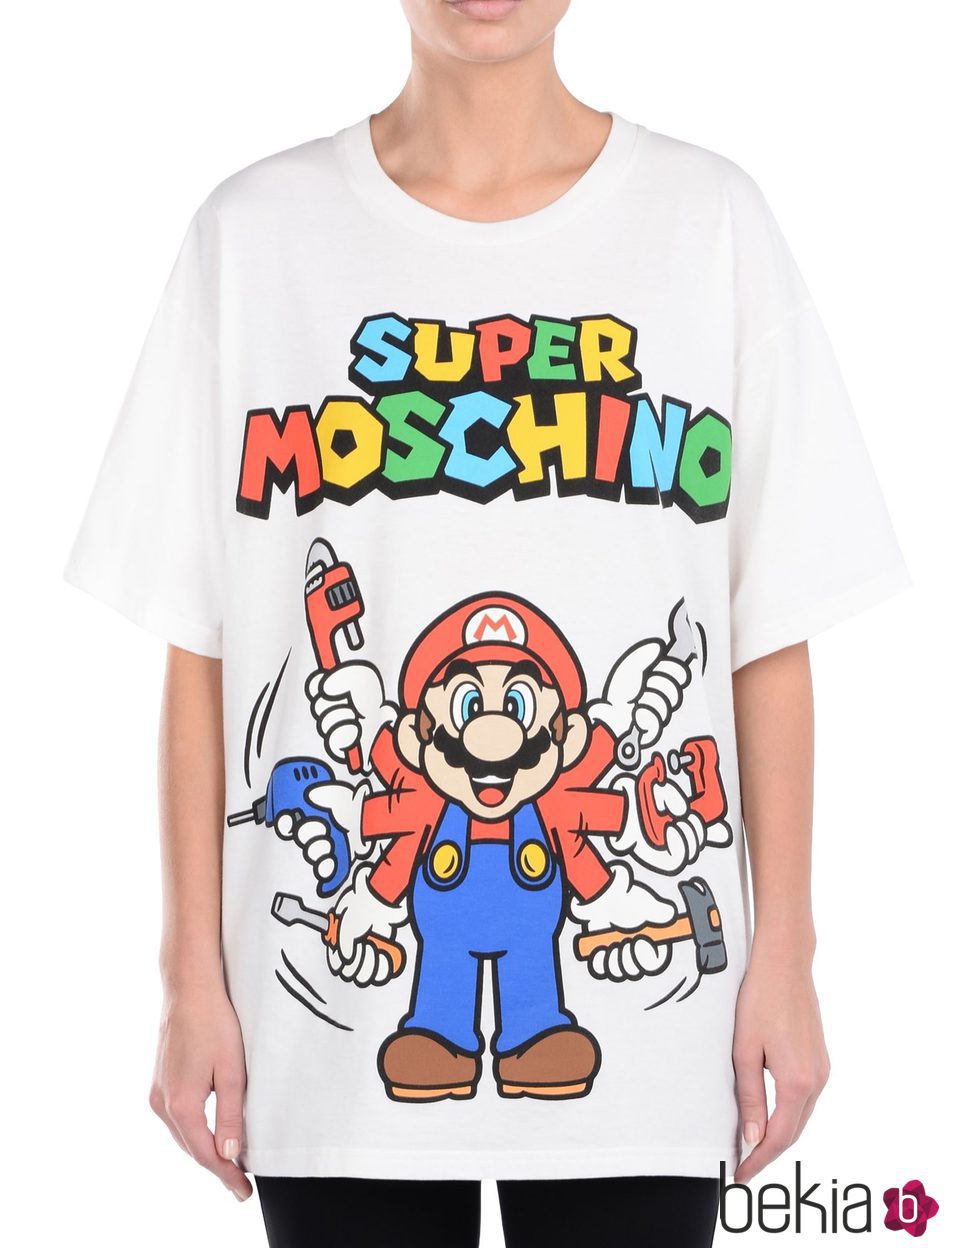 Camiseta blanca con personaje Mario Bros de 'Super Moschino' para AW 15